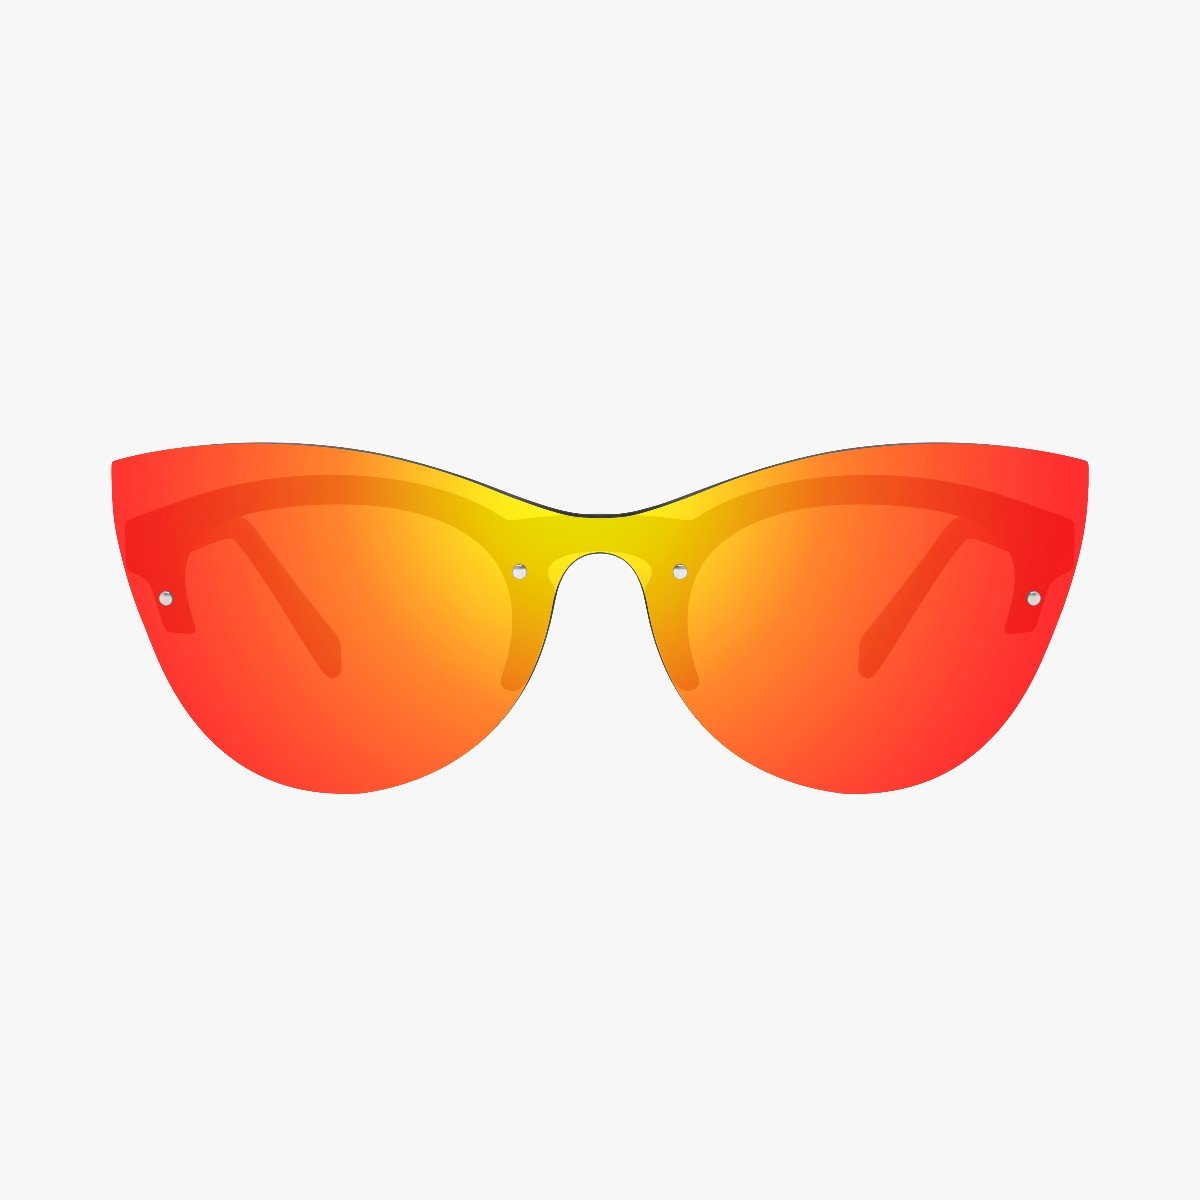 Scicon Sports | Phantom Lifestyle Women's Sunglasses - Black Frame, Red Lens - EY180602